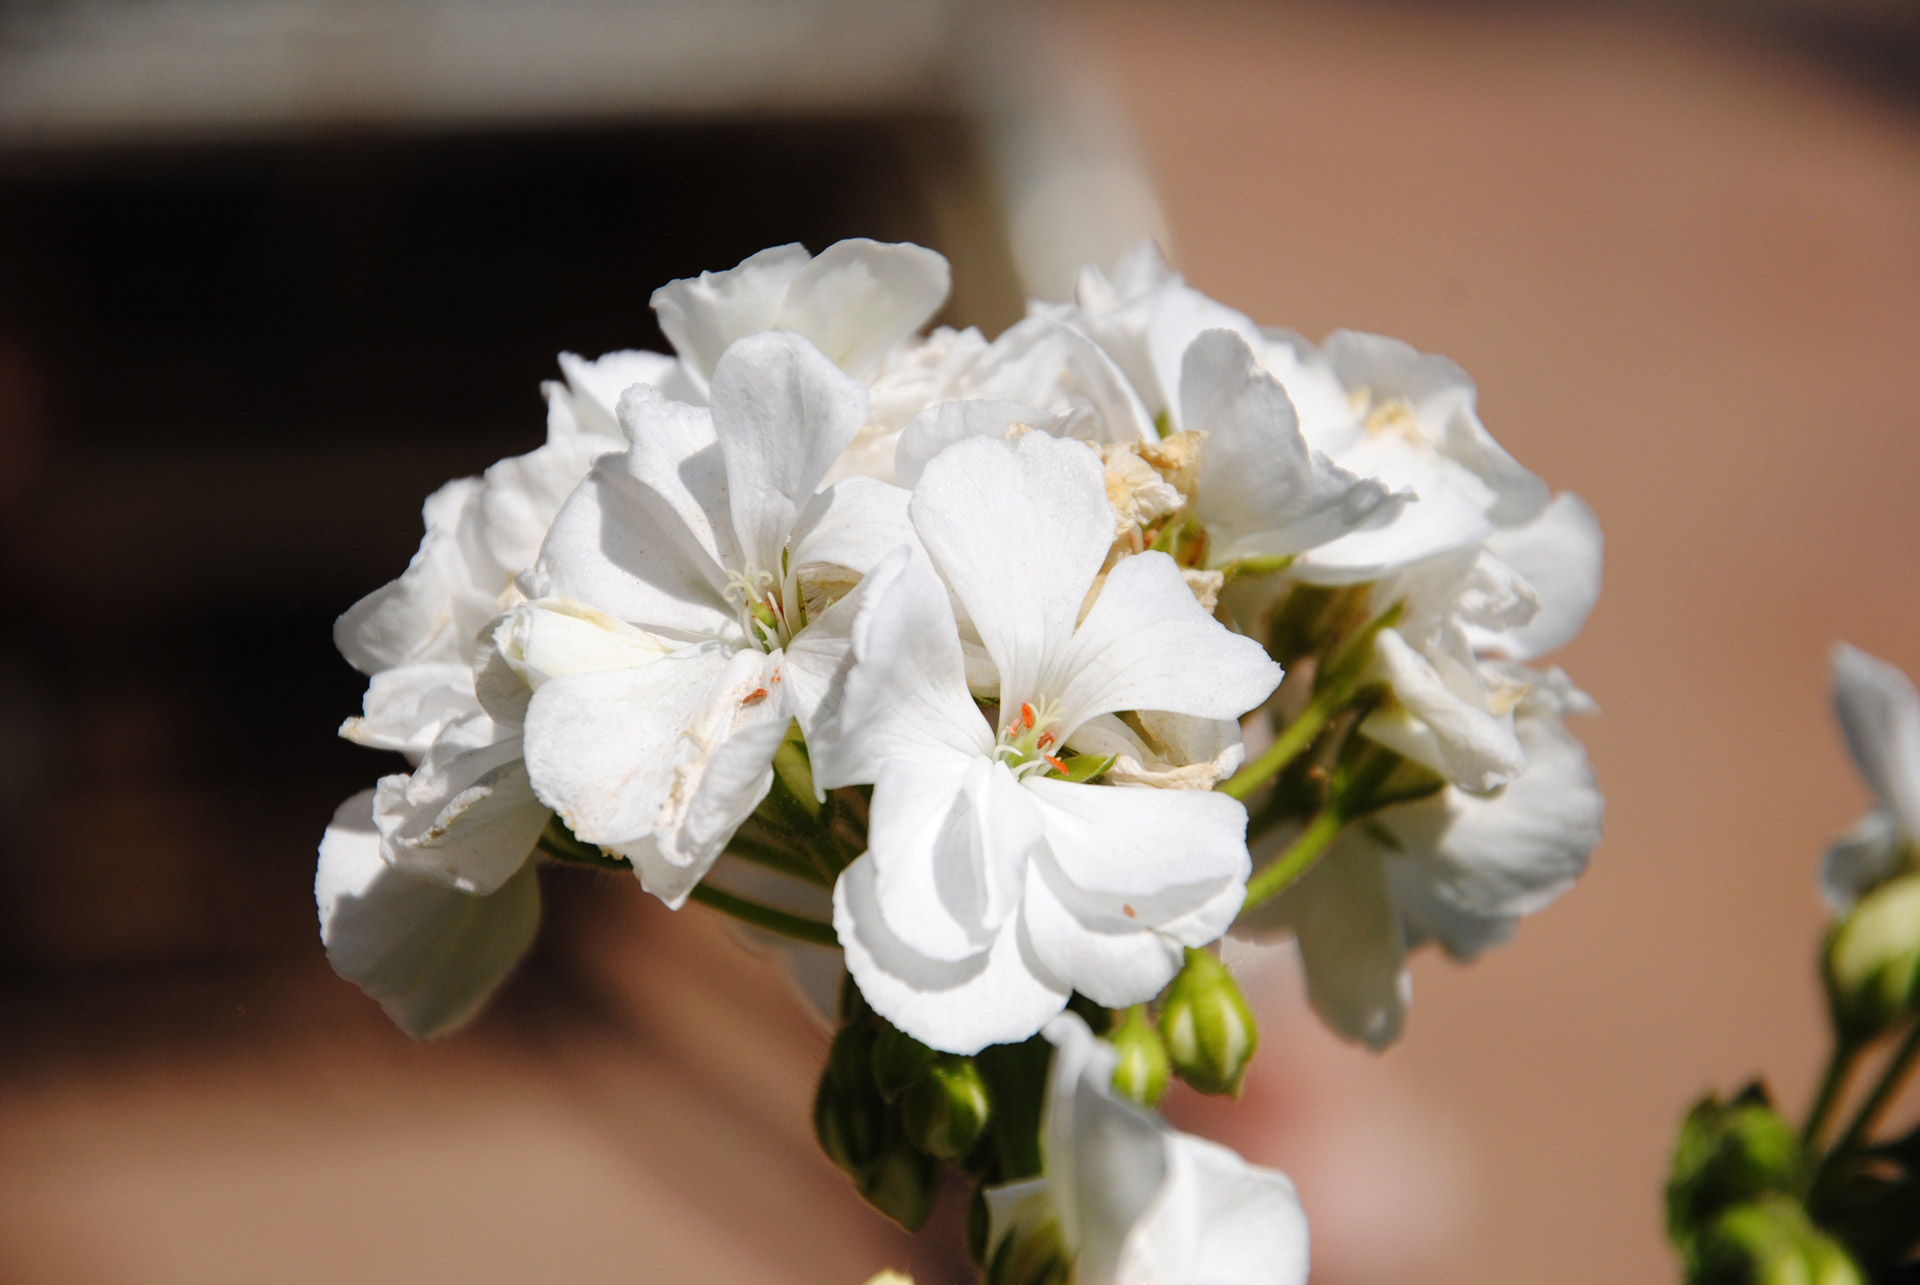 White geraniums